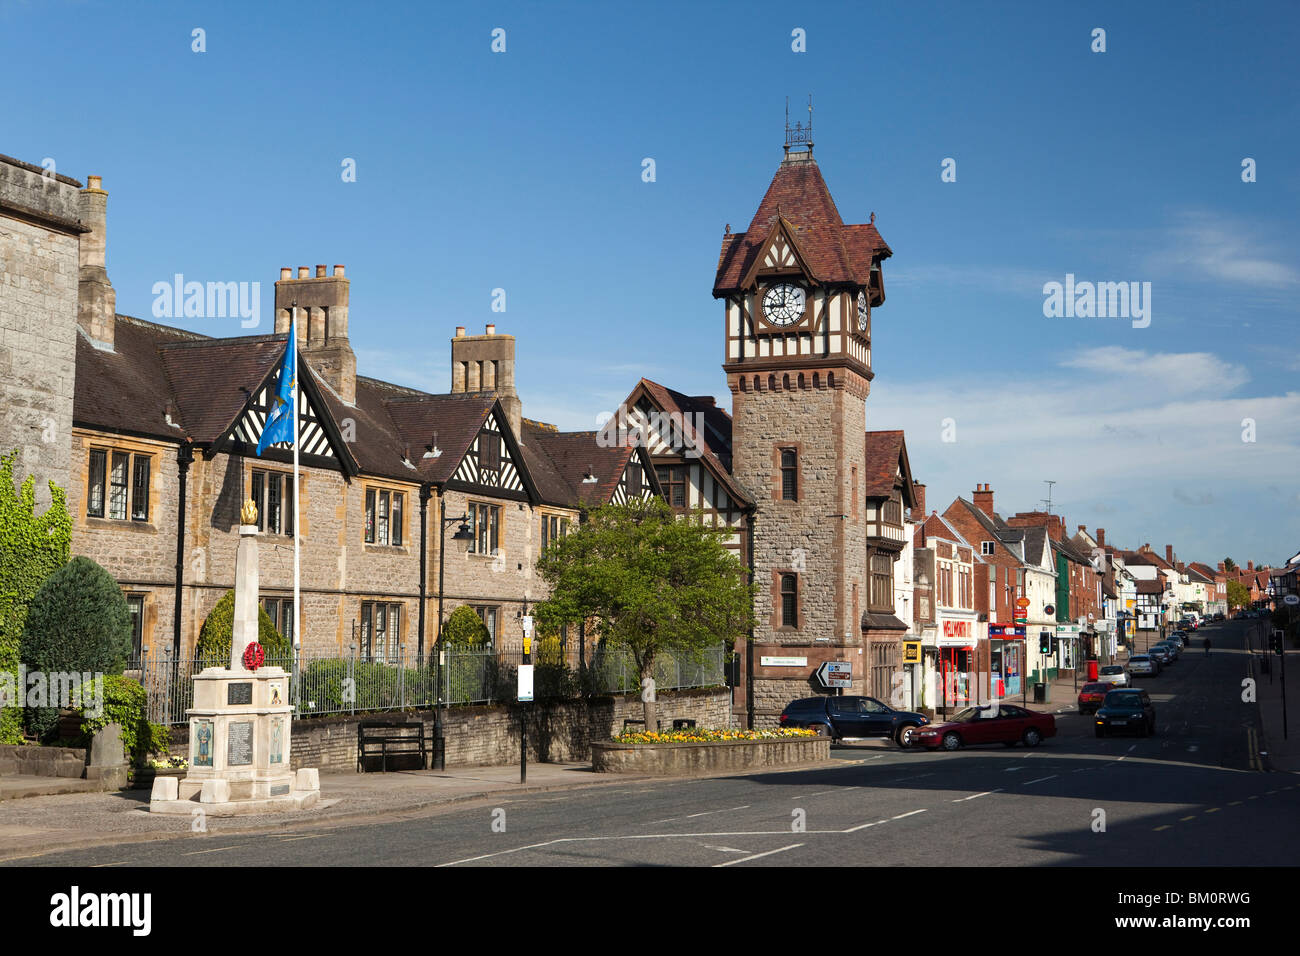 UK, Herefordshire, Ledbury, High Street, Public Library clock tower ...